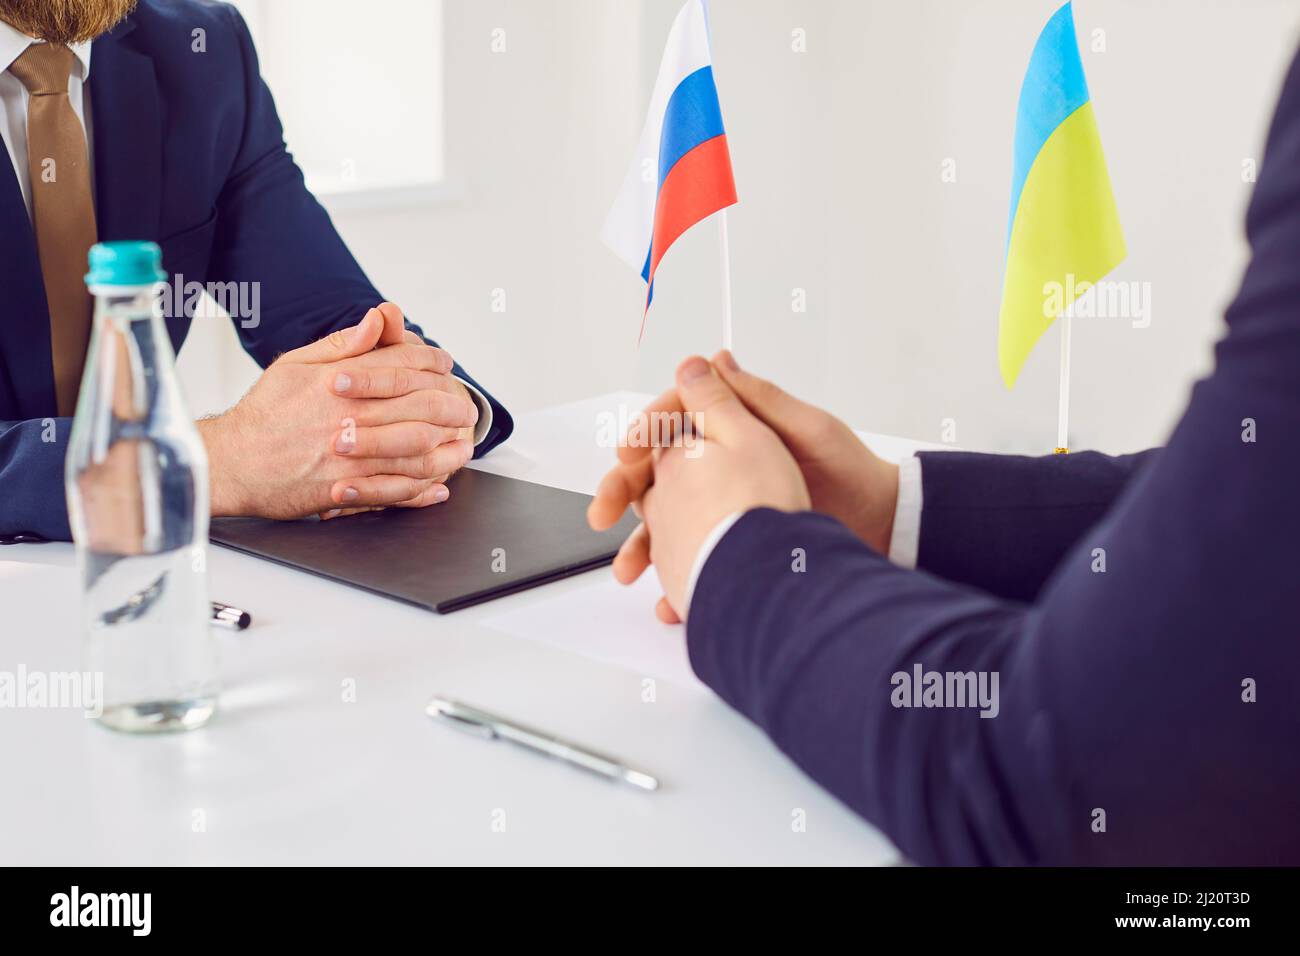 Ukraine and Russia's diplomats meet for negotiation in order to stop war in Ukraine Stock Photo